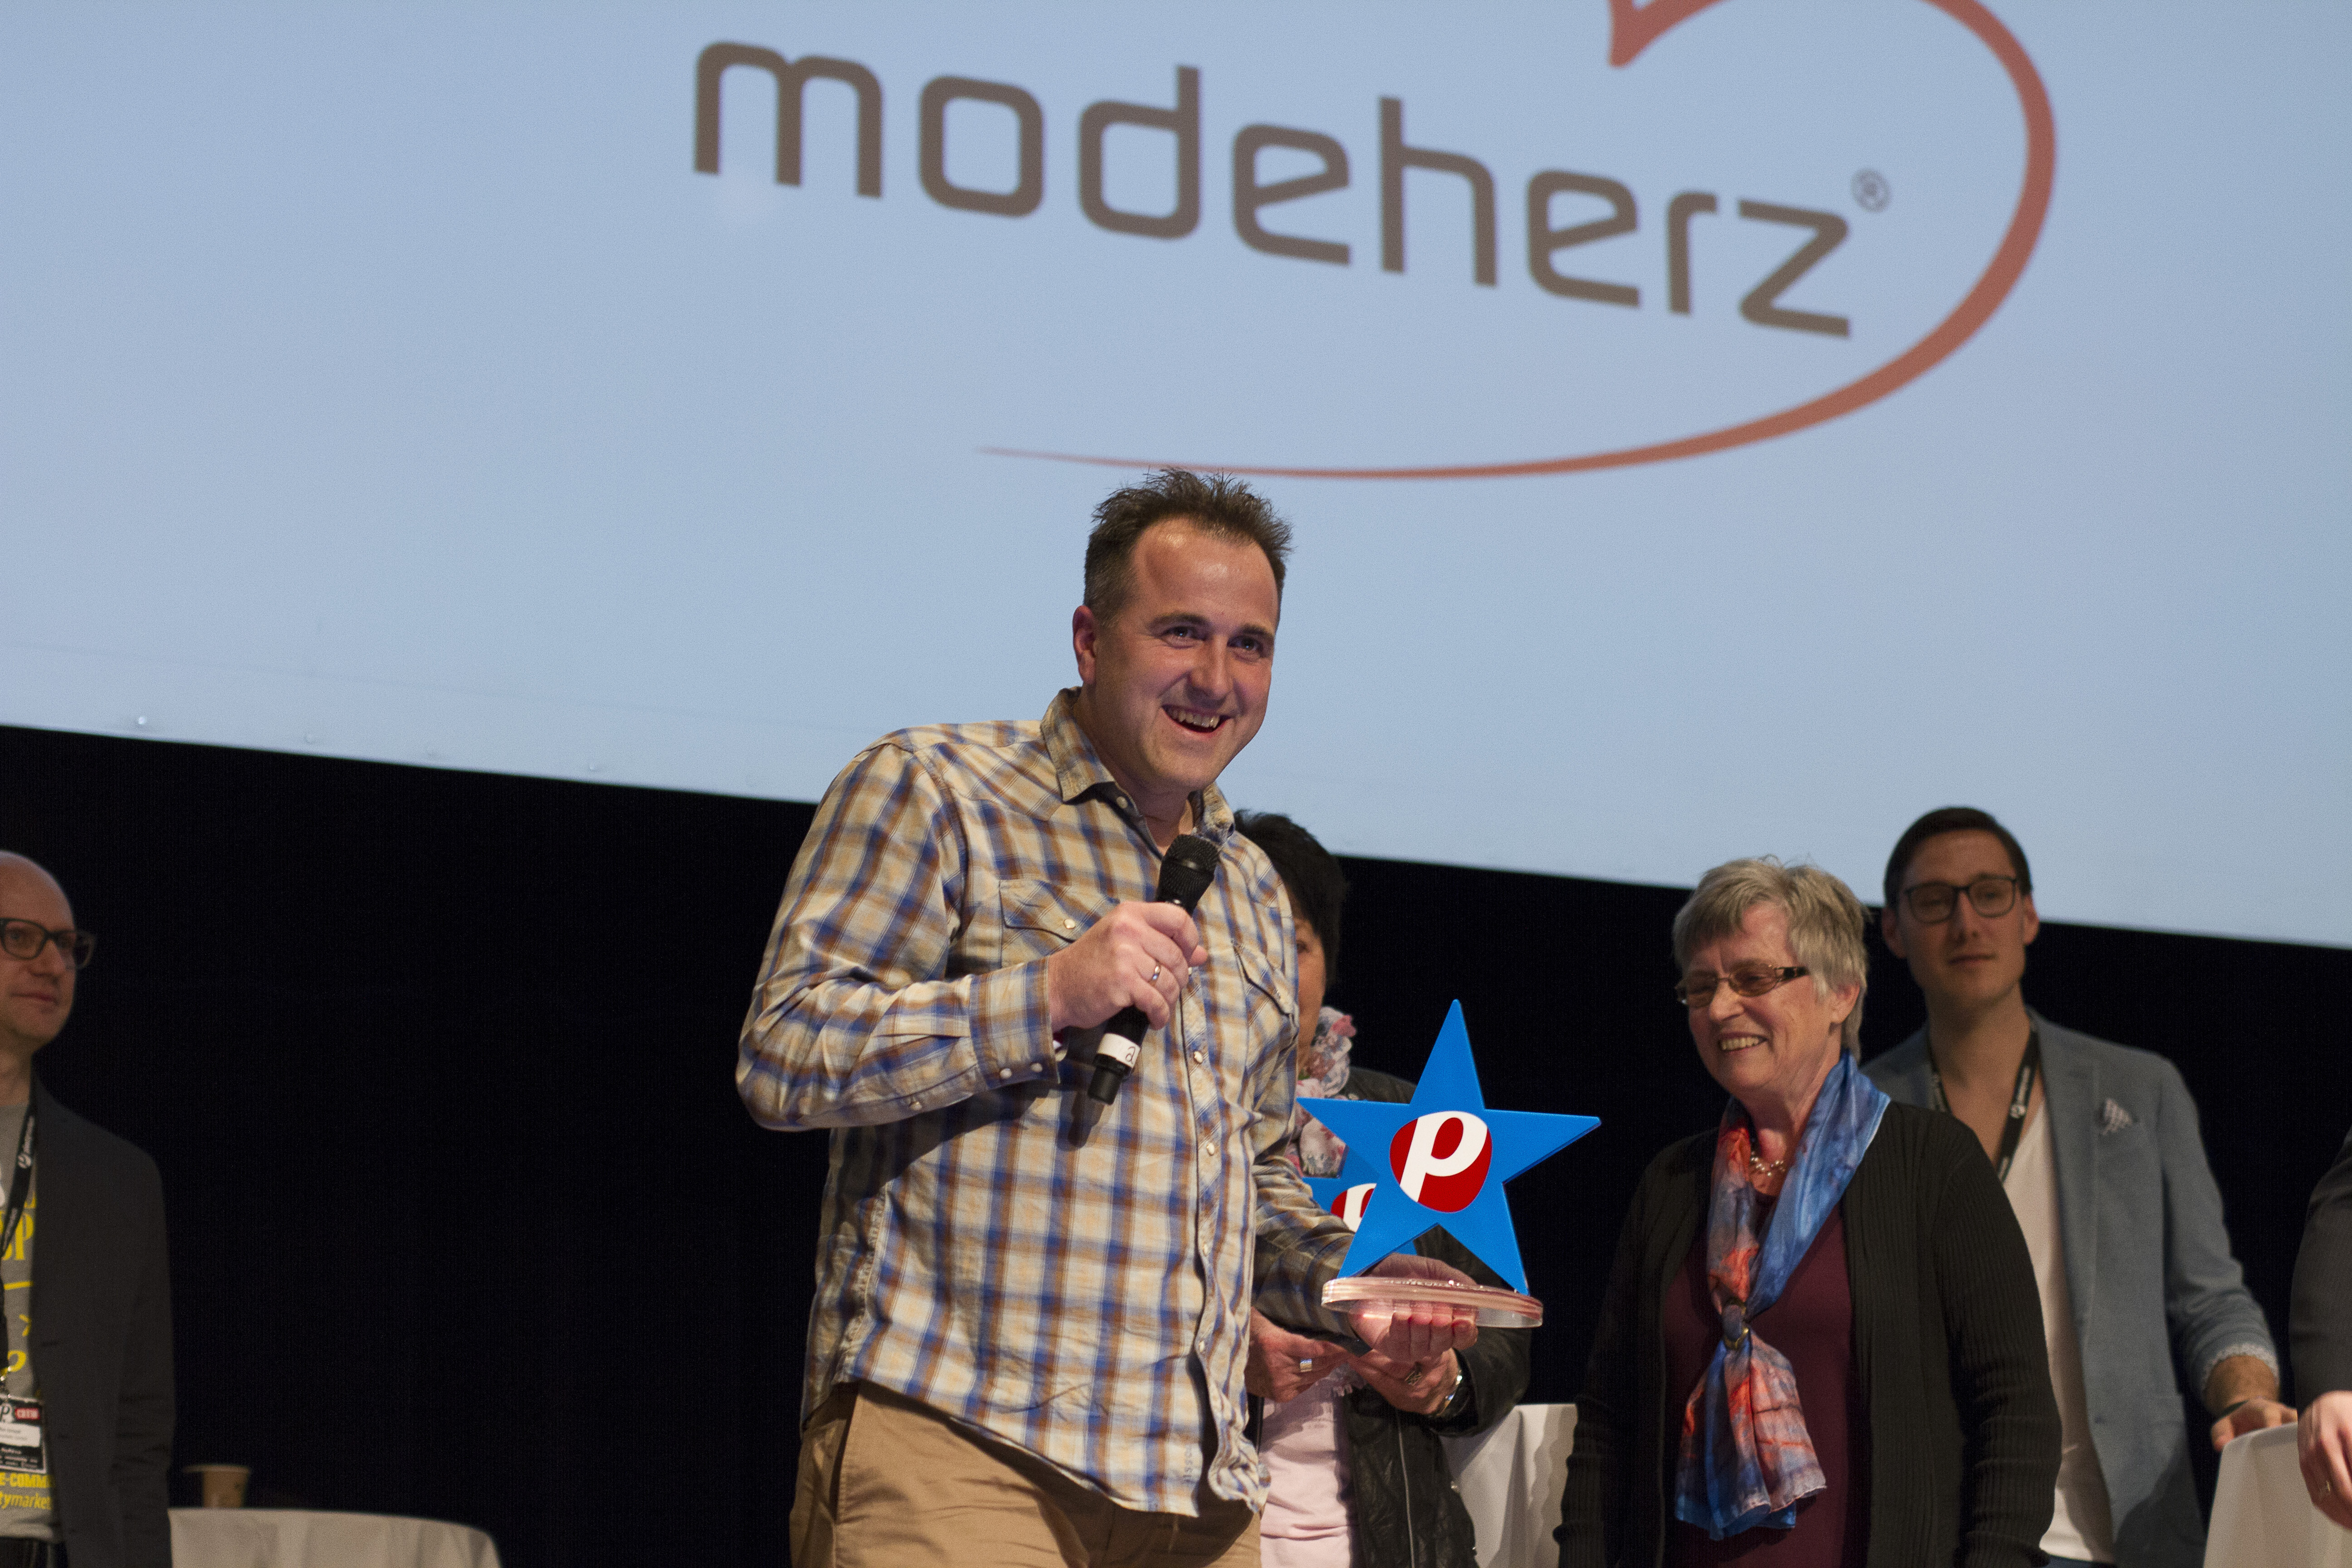 plenty Award 2016 Gewinner modeherz